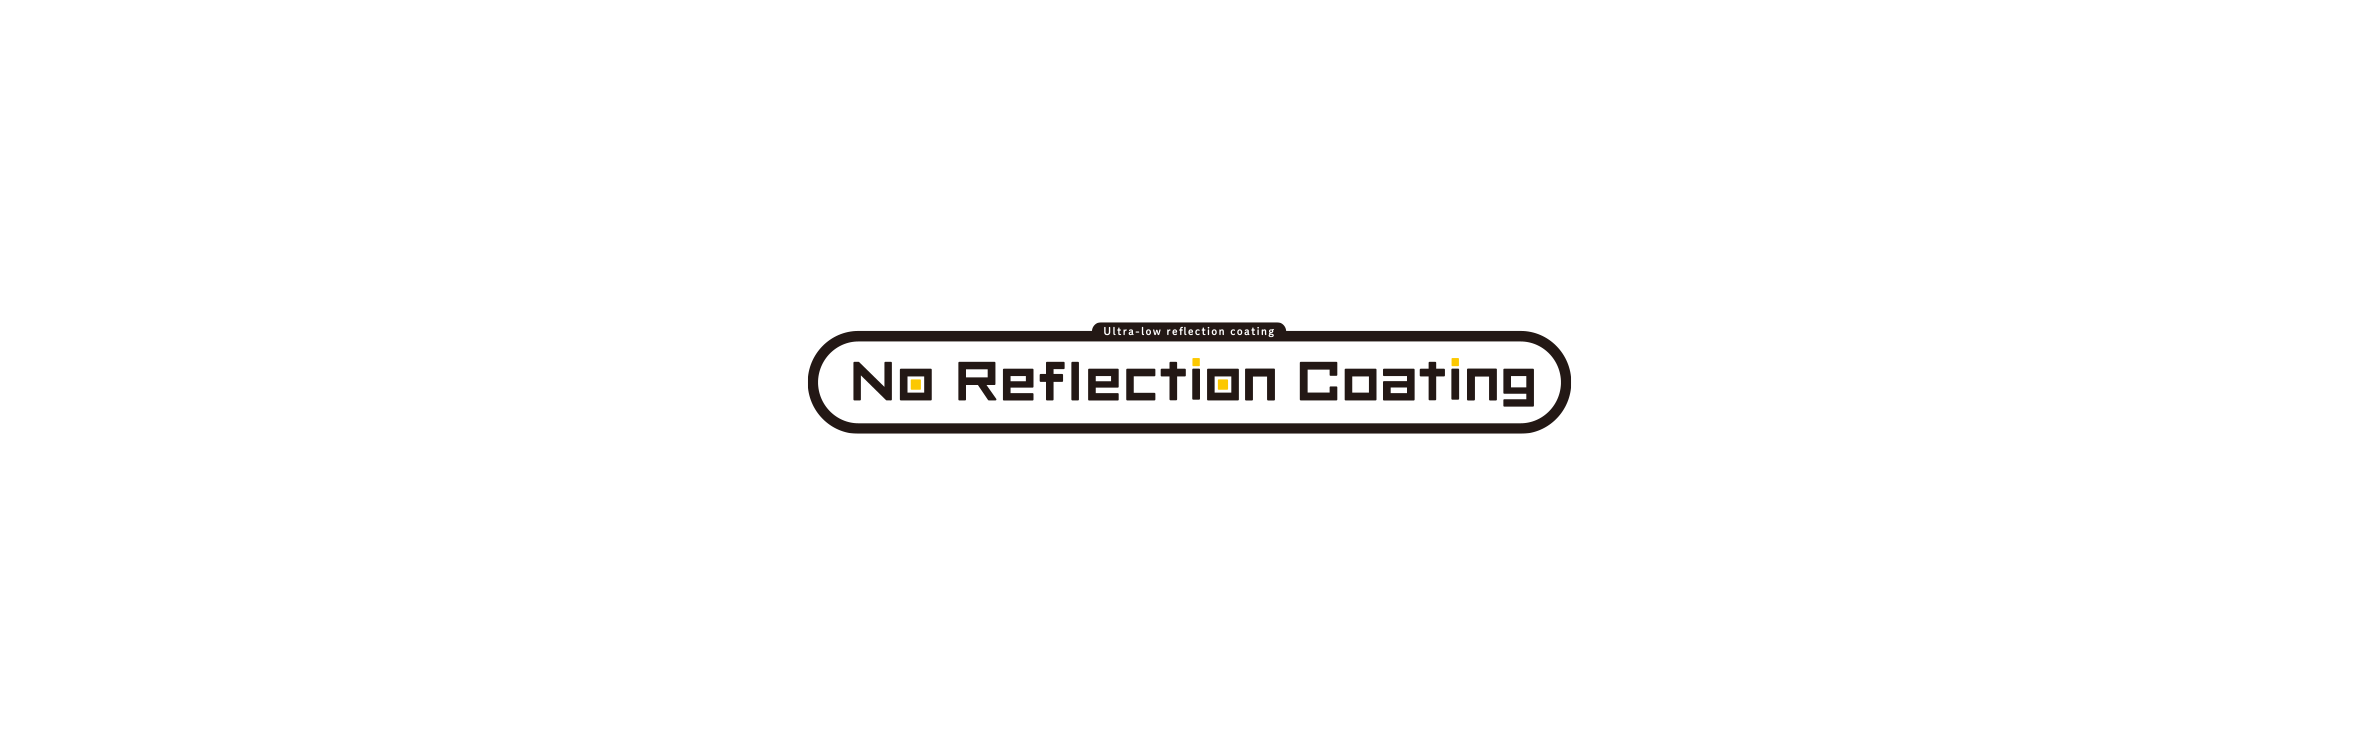 No Reflection Coating(NRC)